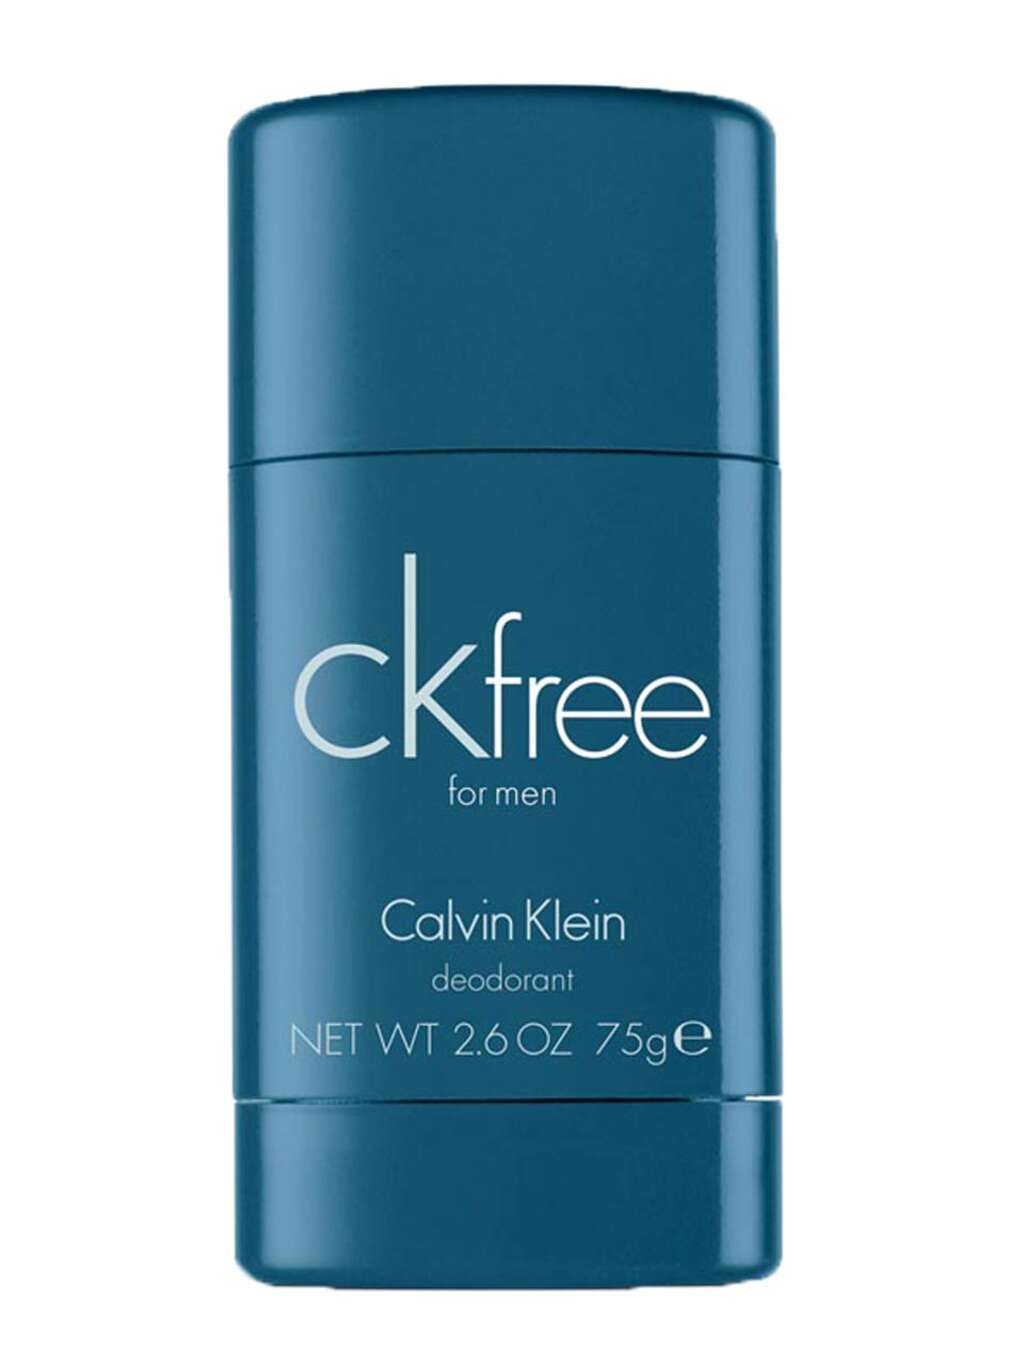 Calvin Klein CK Free Deodorant Stick